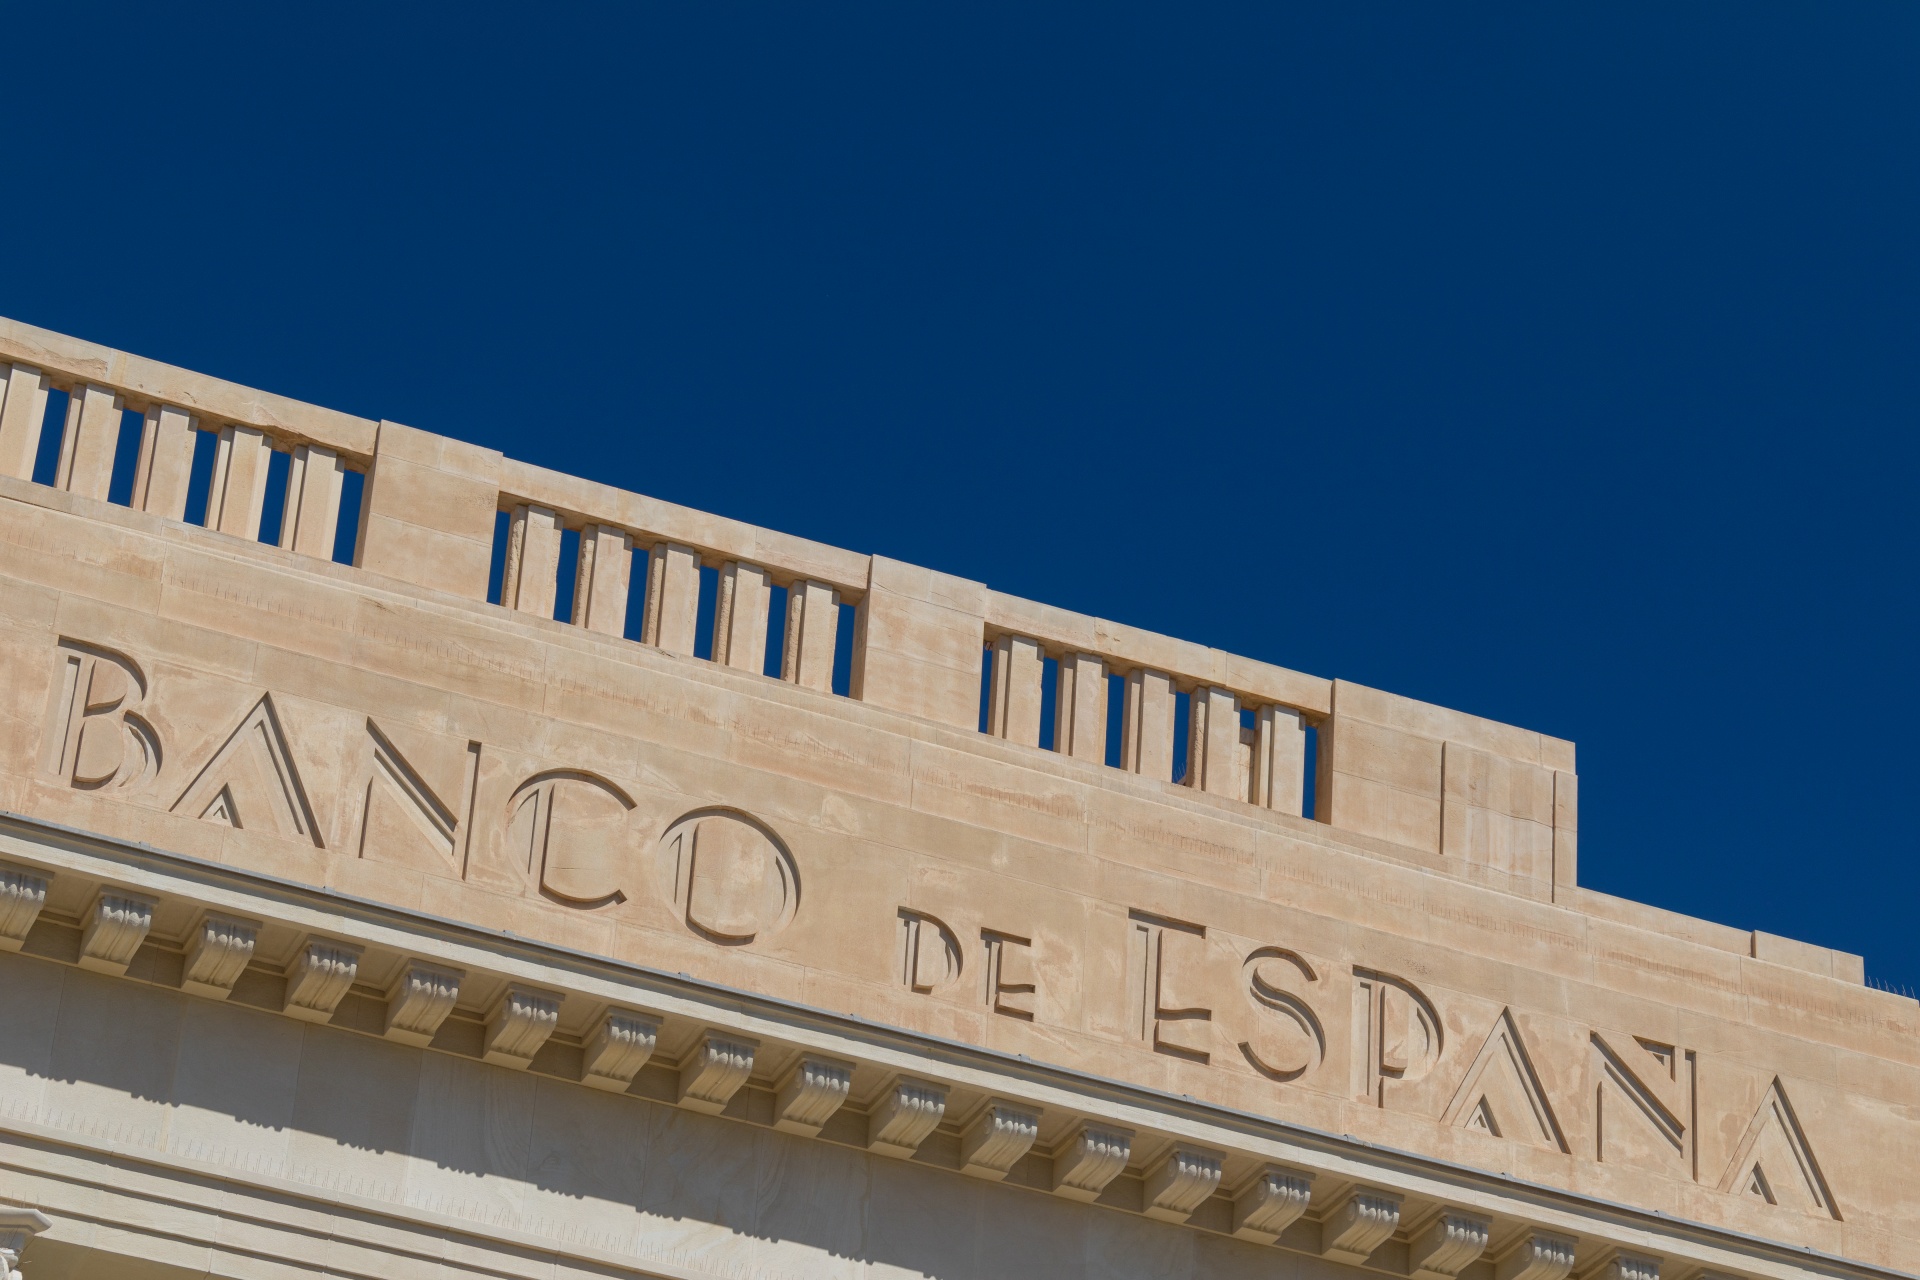 Spanish Bank Sign